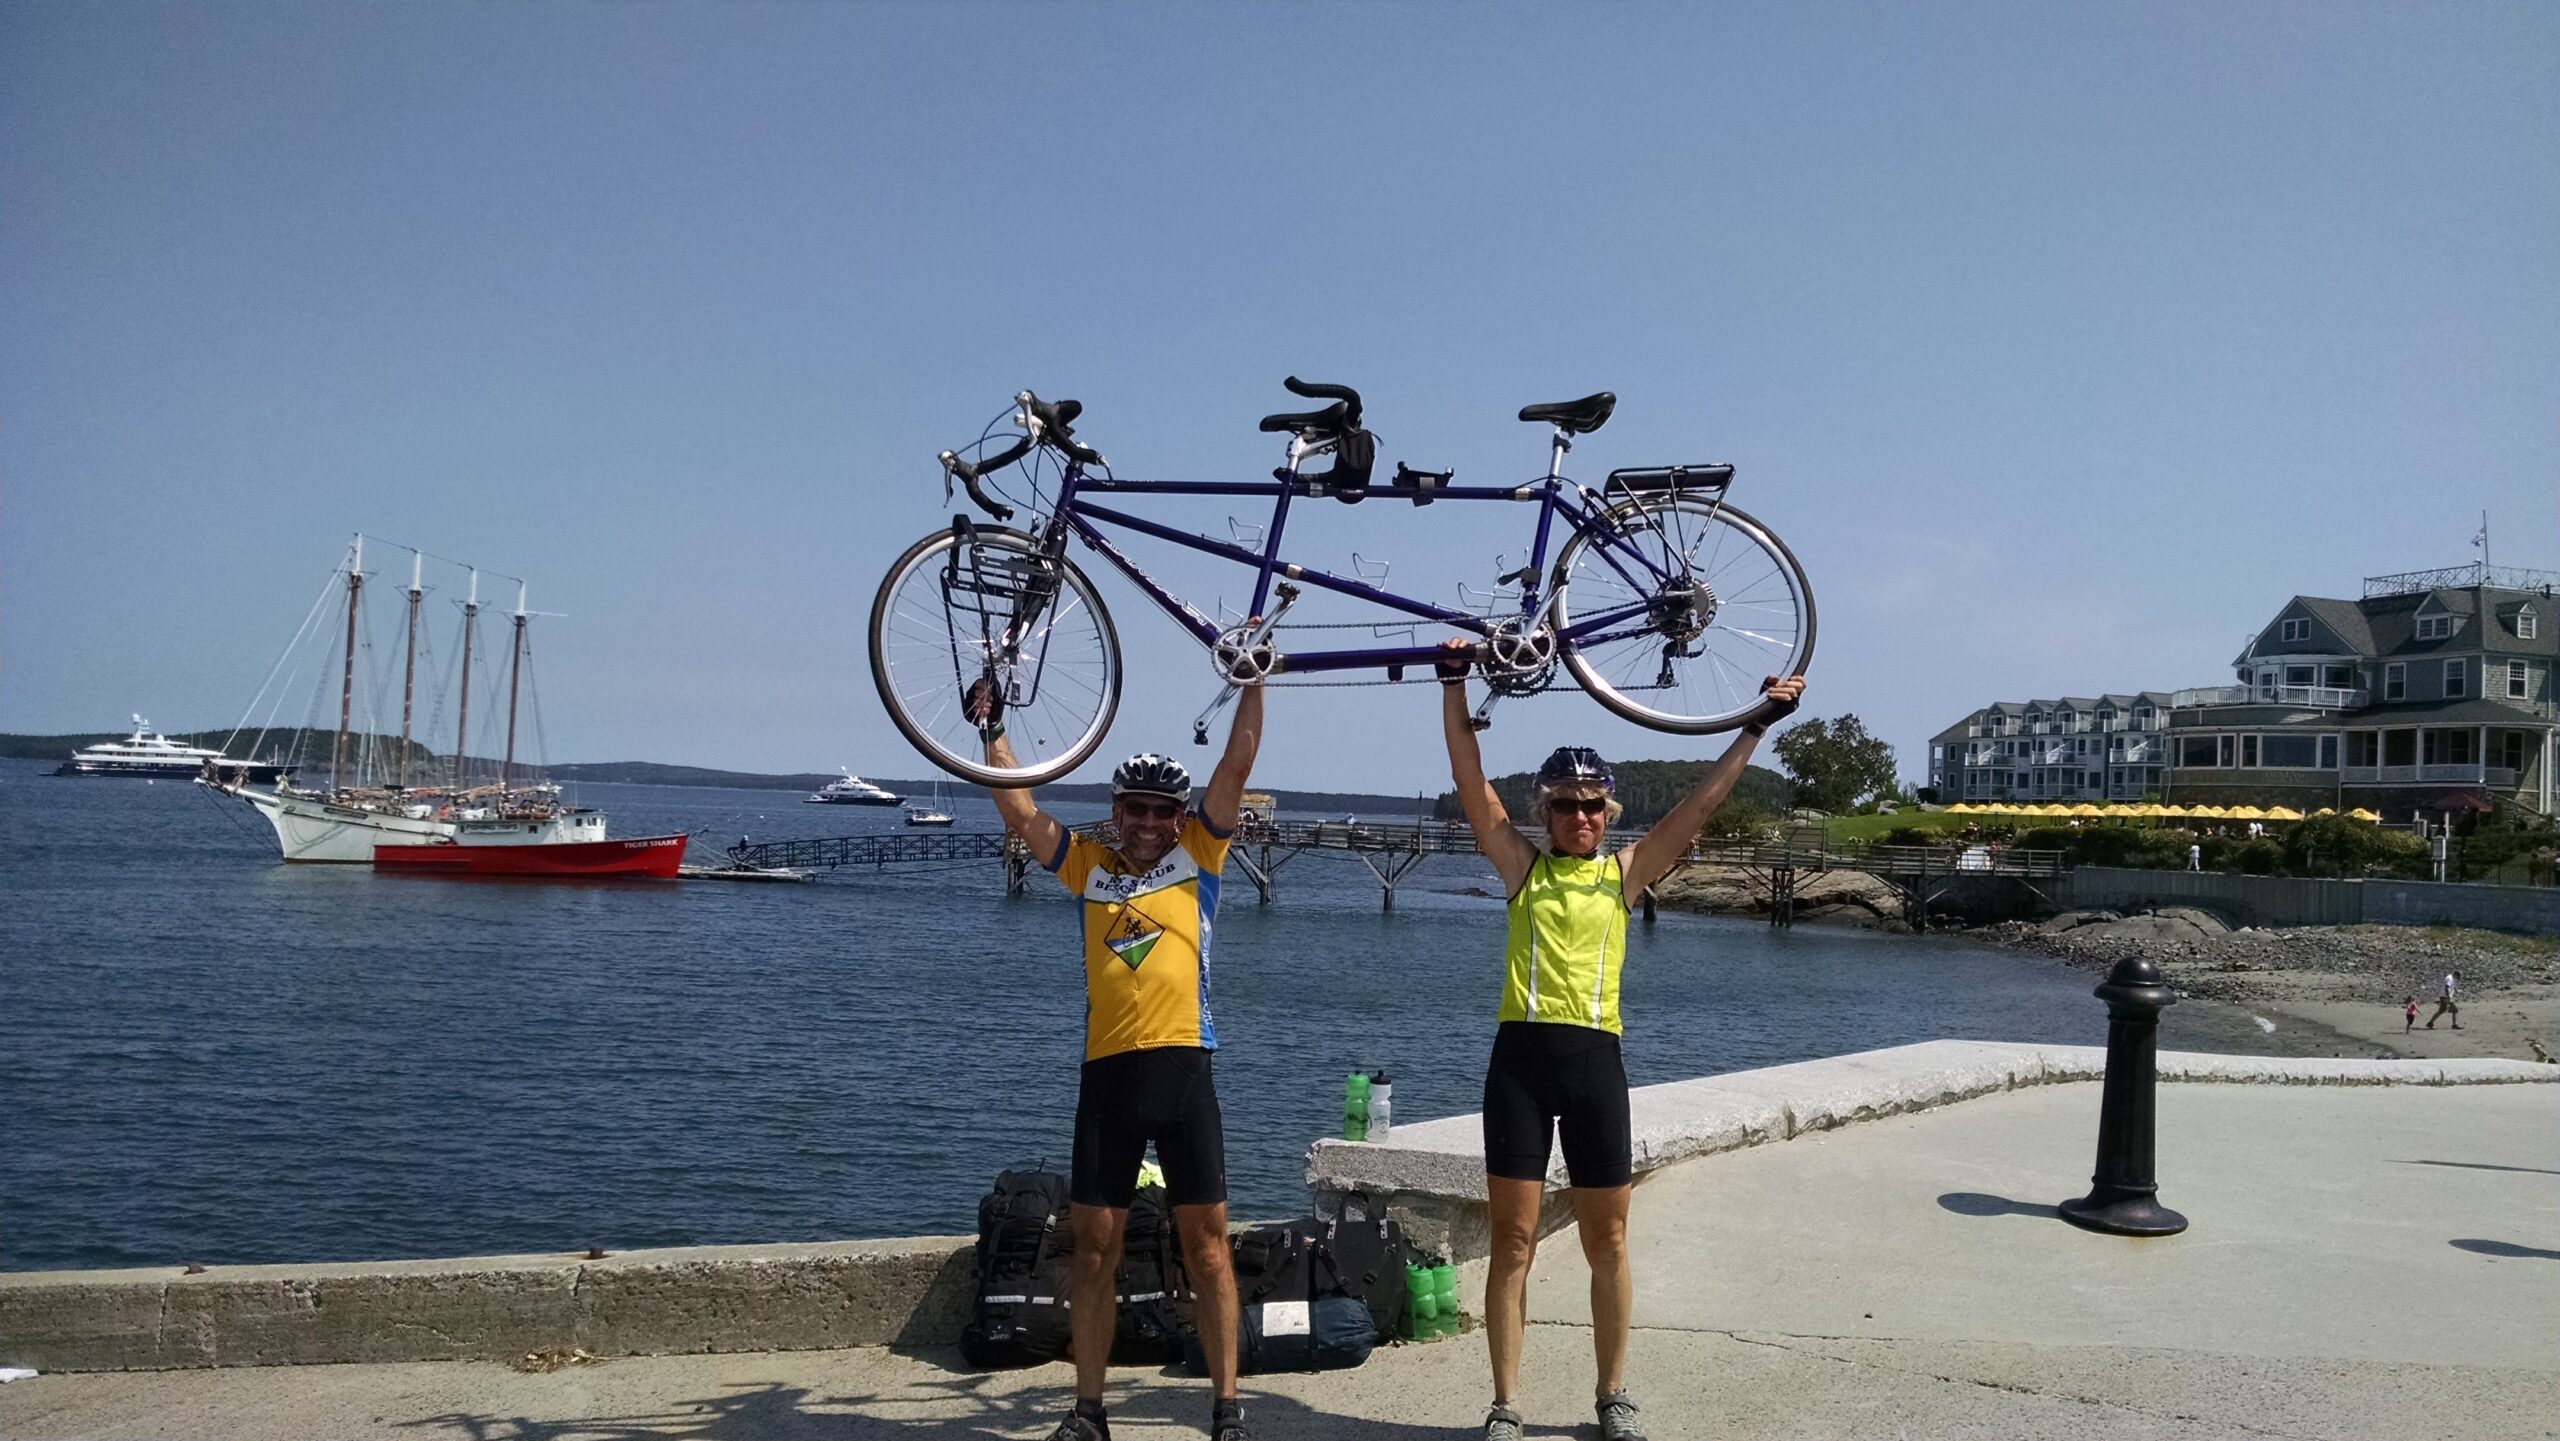 A team approach: Tandem-bike-riding couple writes books, runs Green Bay-area business